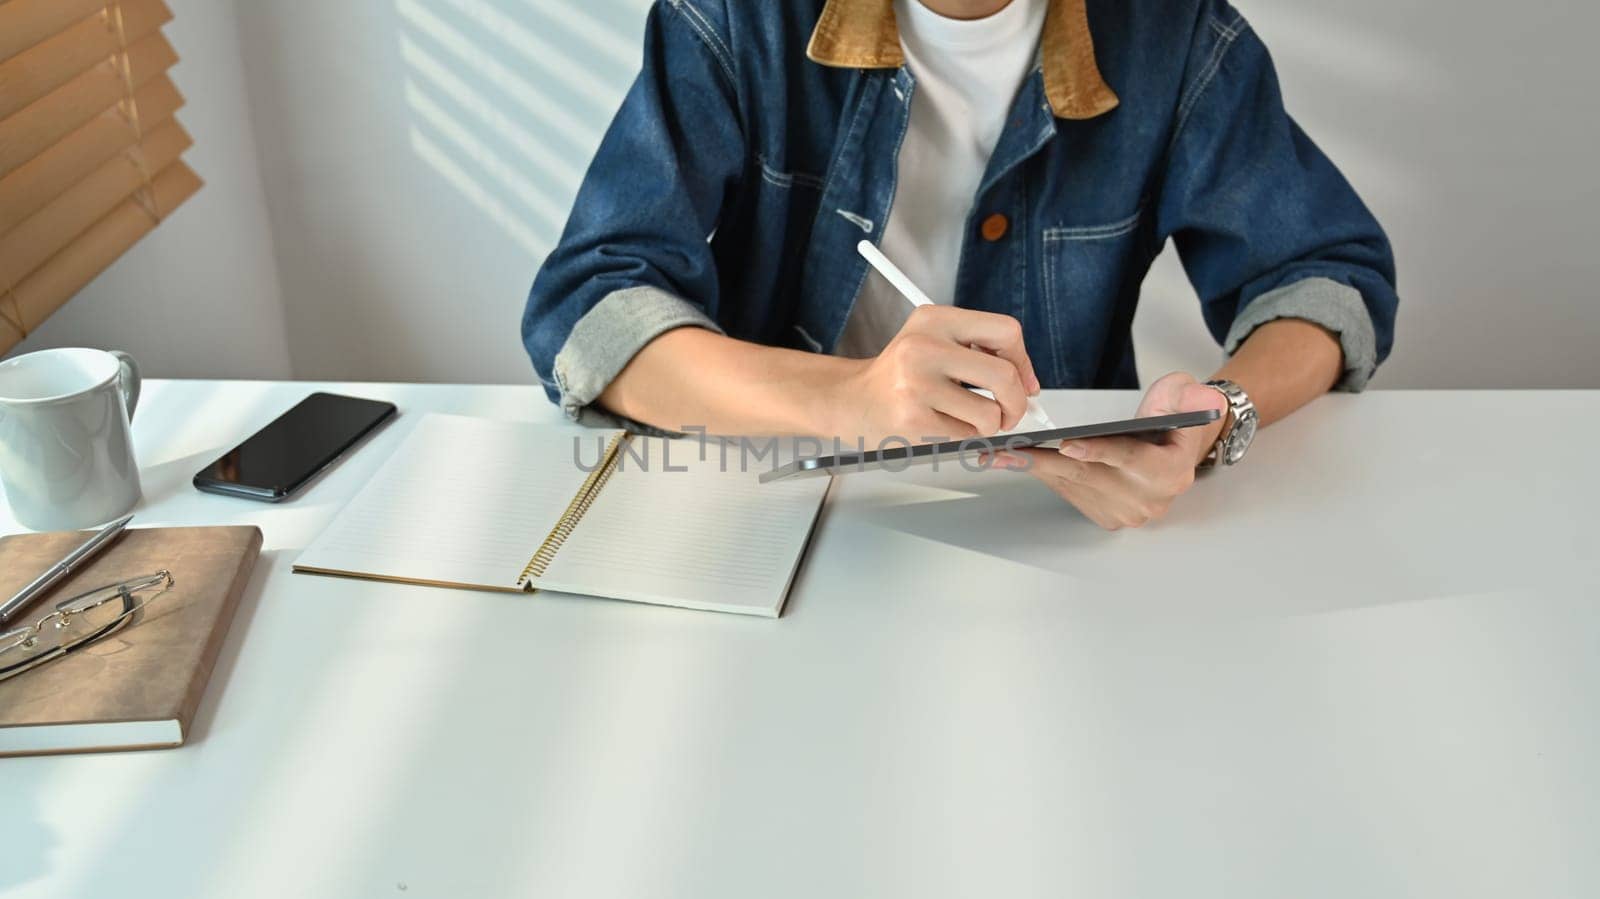 Man freelancer wearing jeans jacket browsing internet or sending email on digital tablet during working at home by prathanchorruangsak